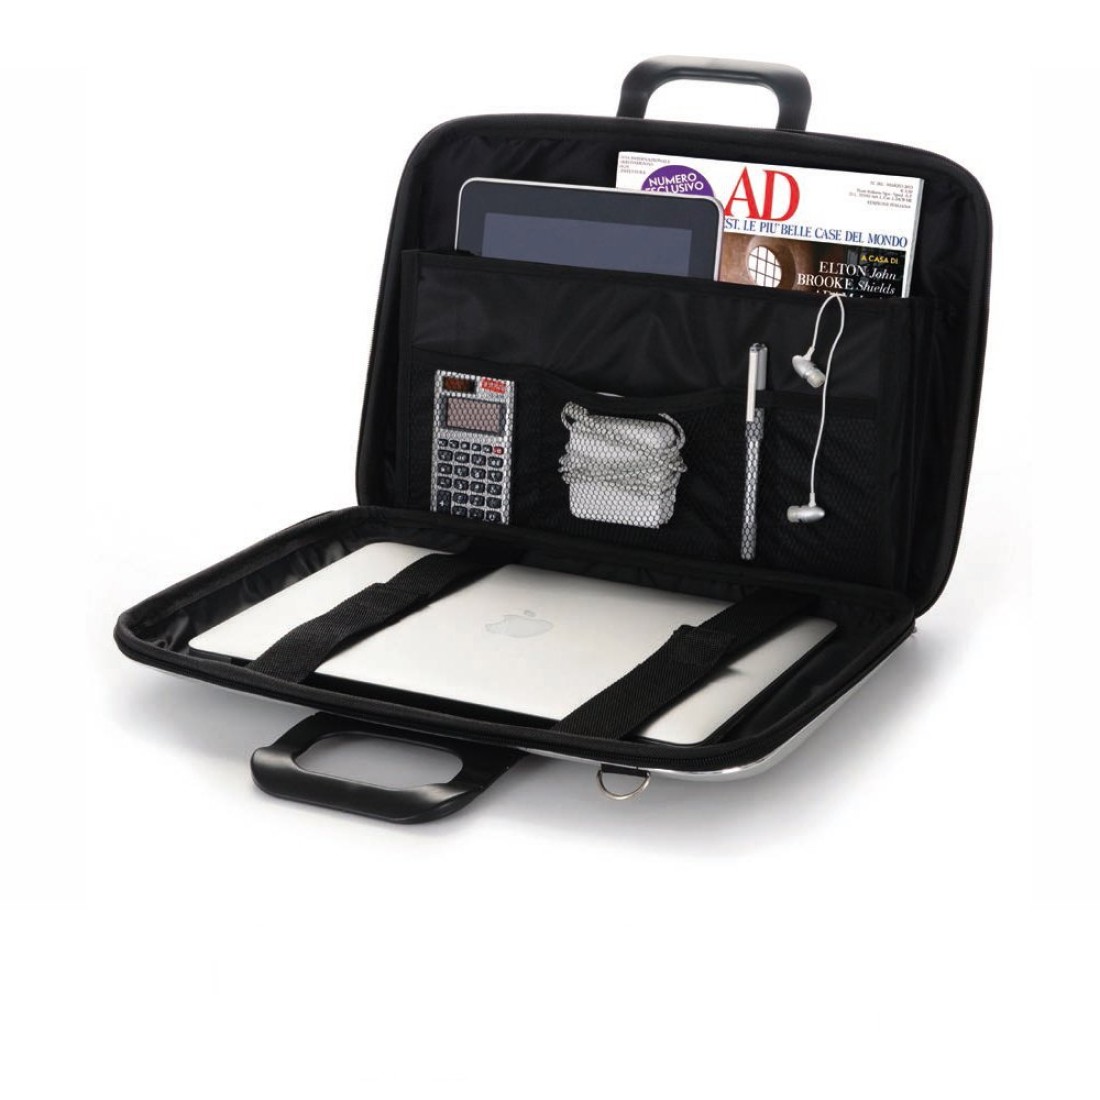 Bombata Classic Nylon (15.6'') Black Laptop Briefcase